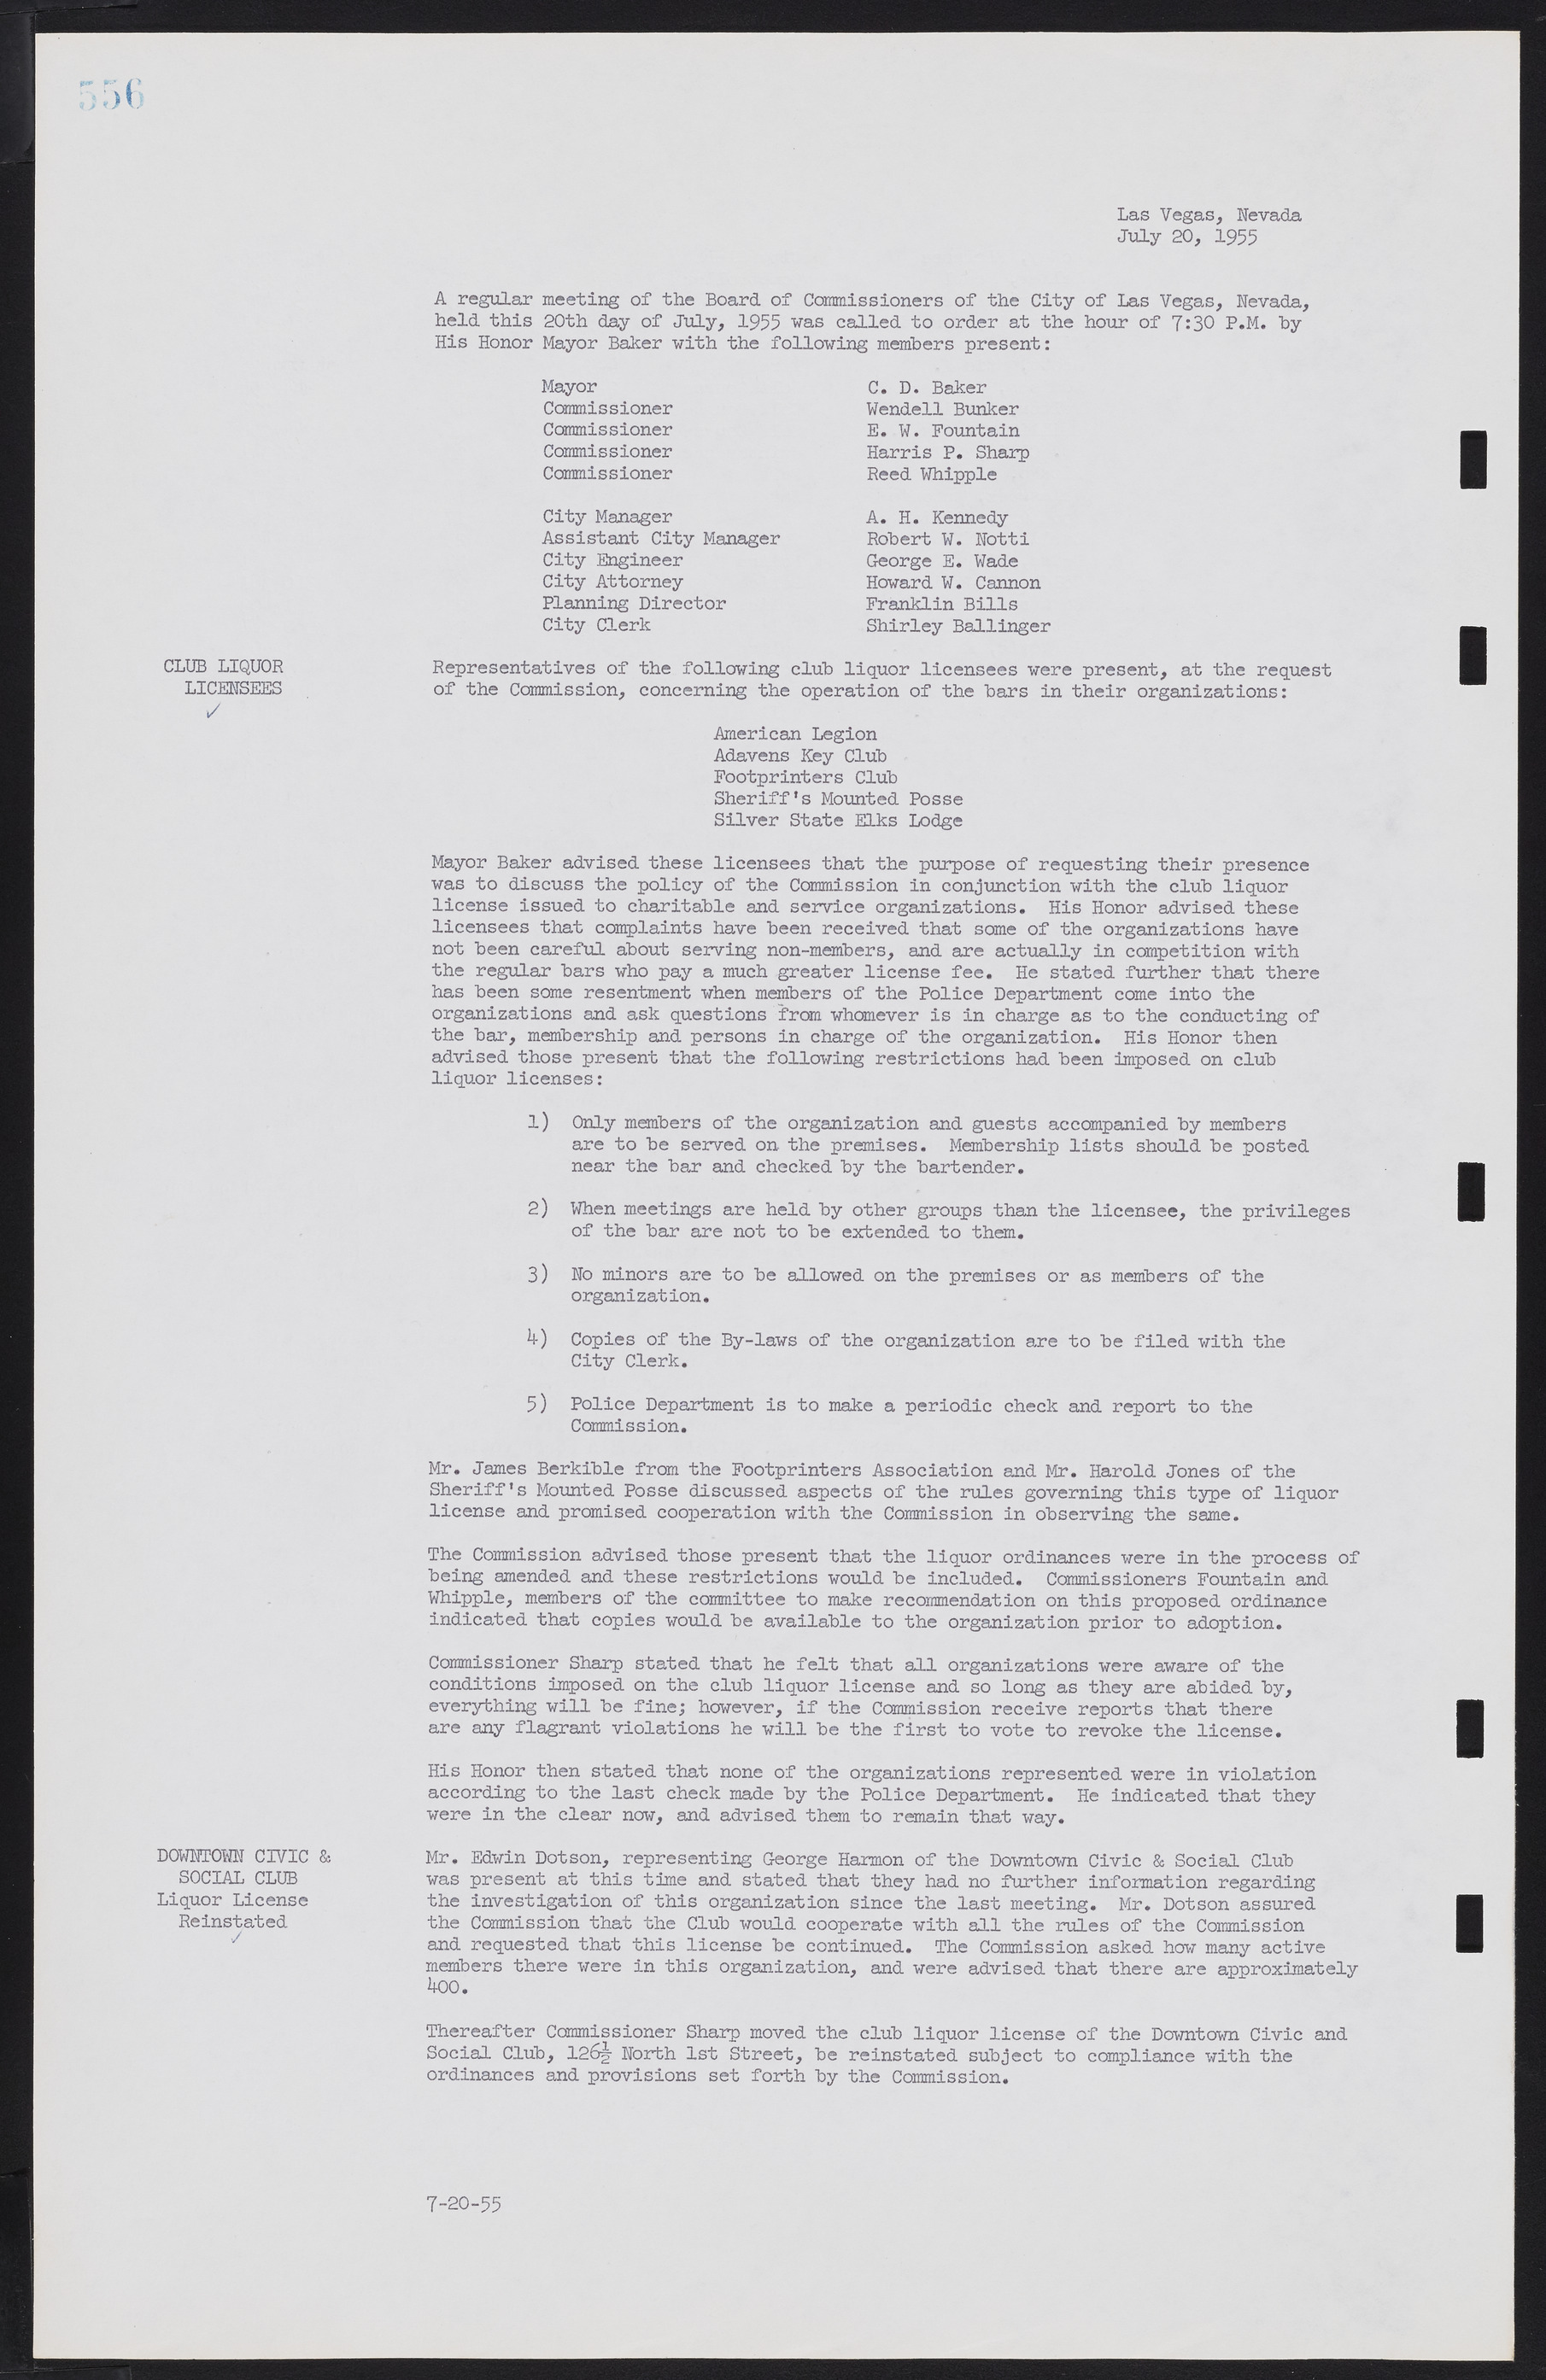 Las Vegas City Commission Minutes, February 17, 1954 to September 21, 1955, lvc000009-562